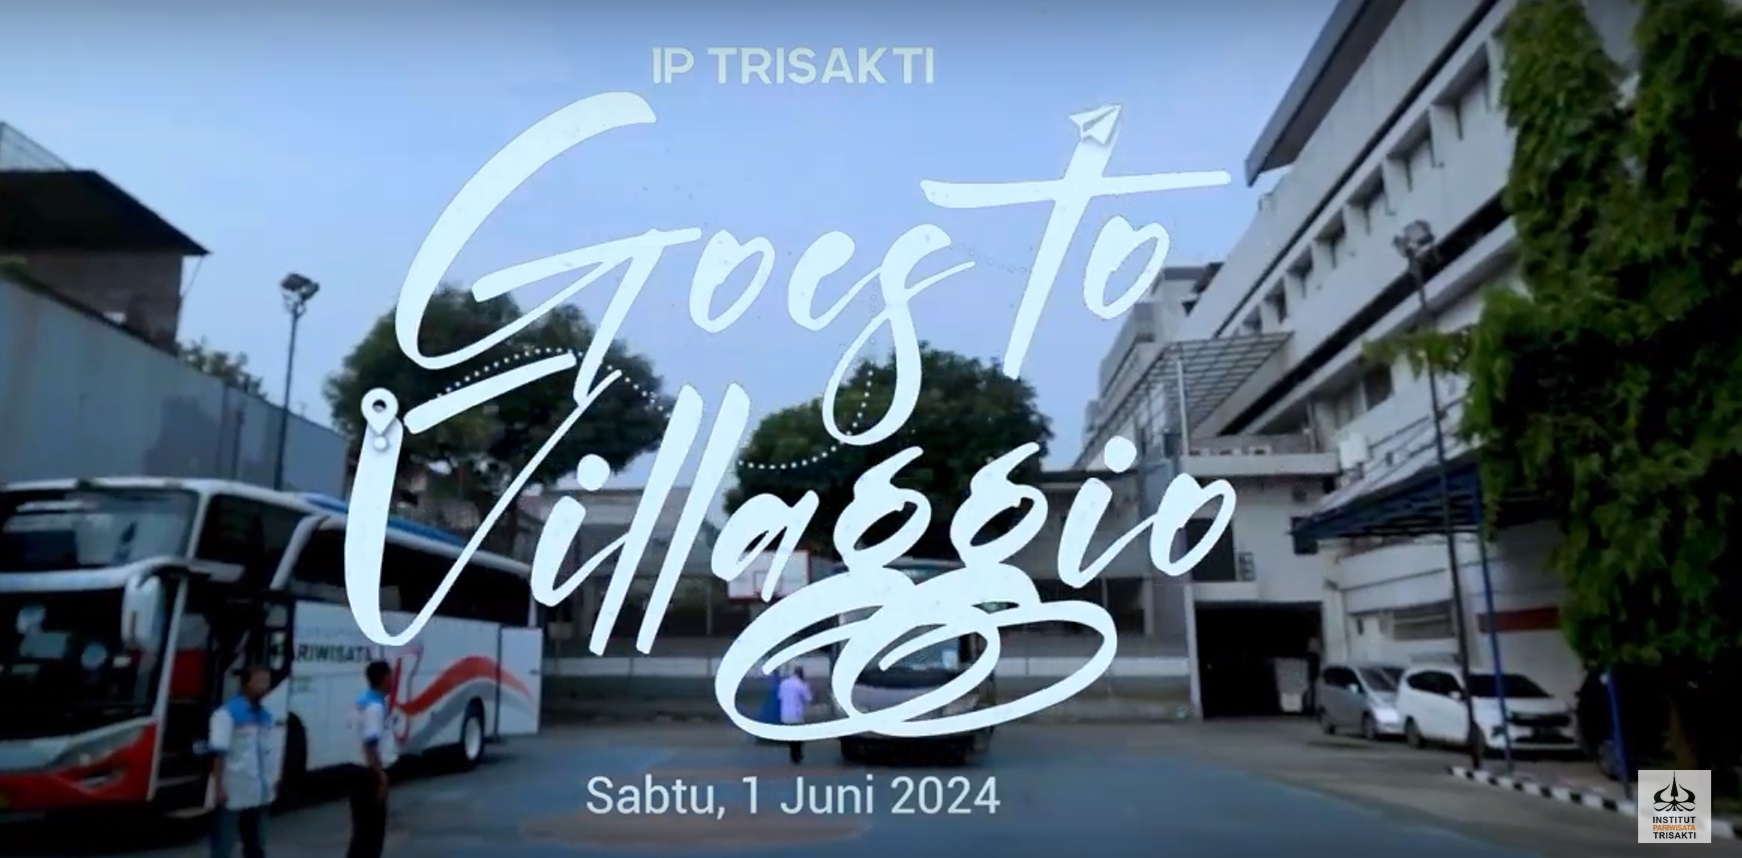 IP Trisakti Goes to Villagio